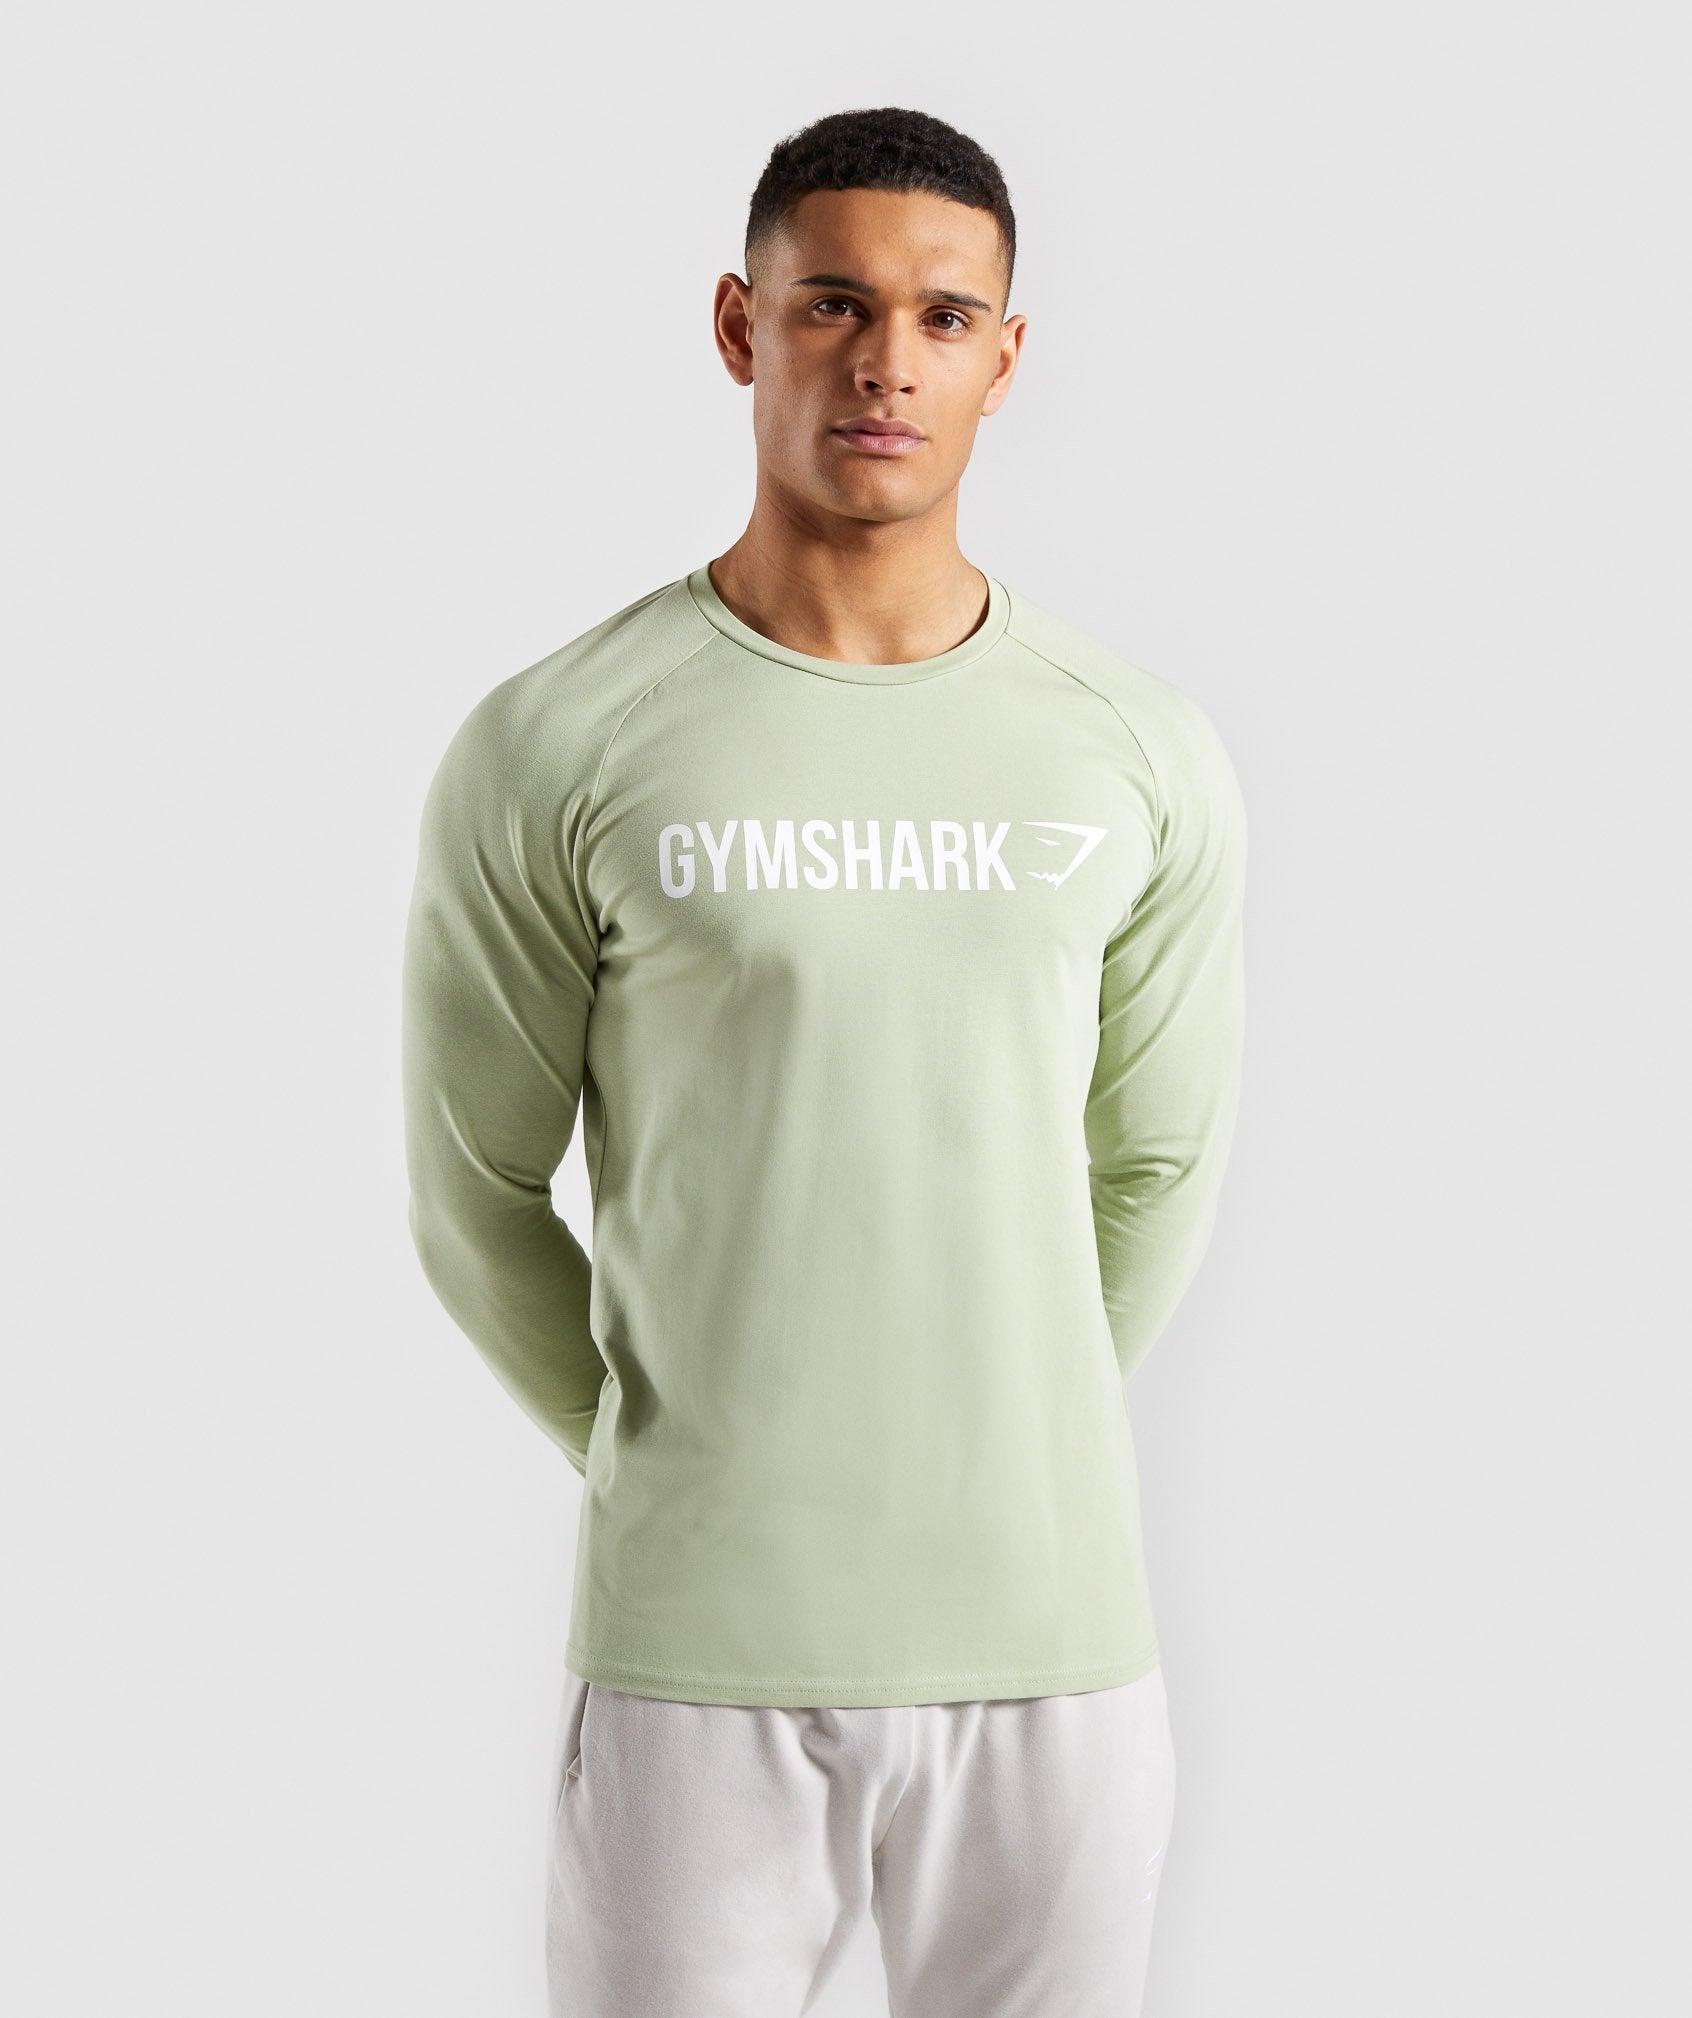 Gymshark Apollo Long Sleeve T-Shirt - Green 